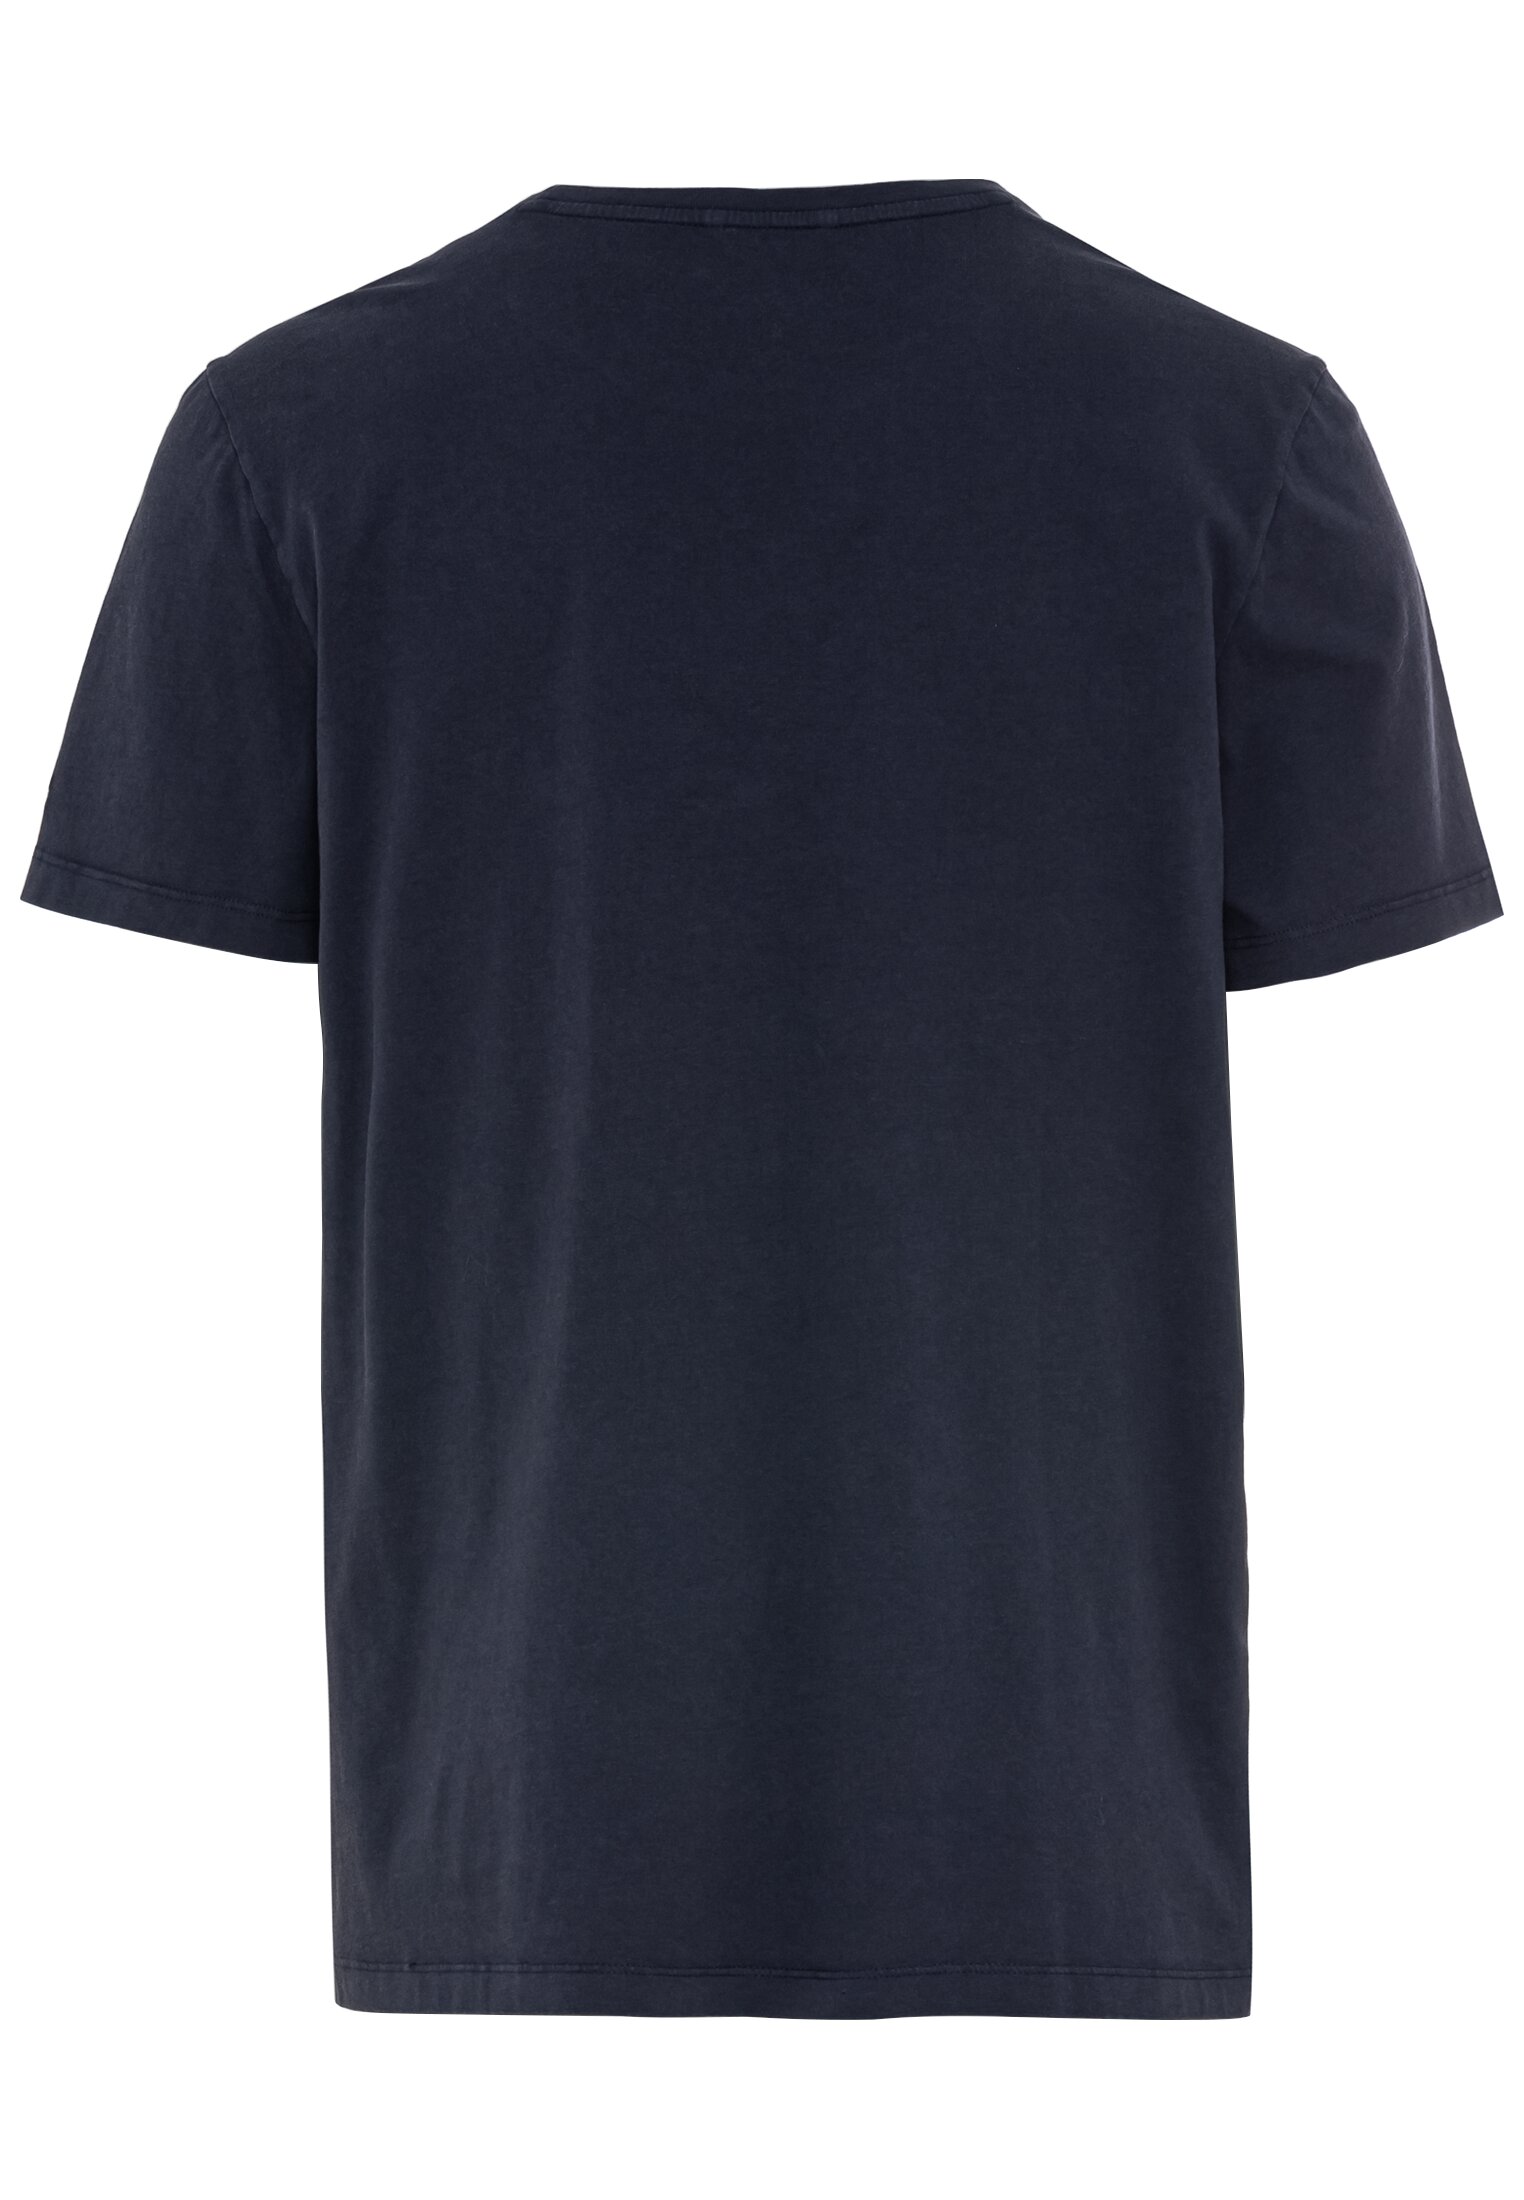 Мужская футболка Camel Active, синяя, цвет синий, размер 50 - фото 4